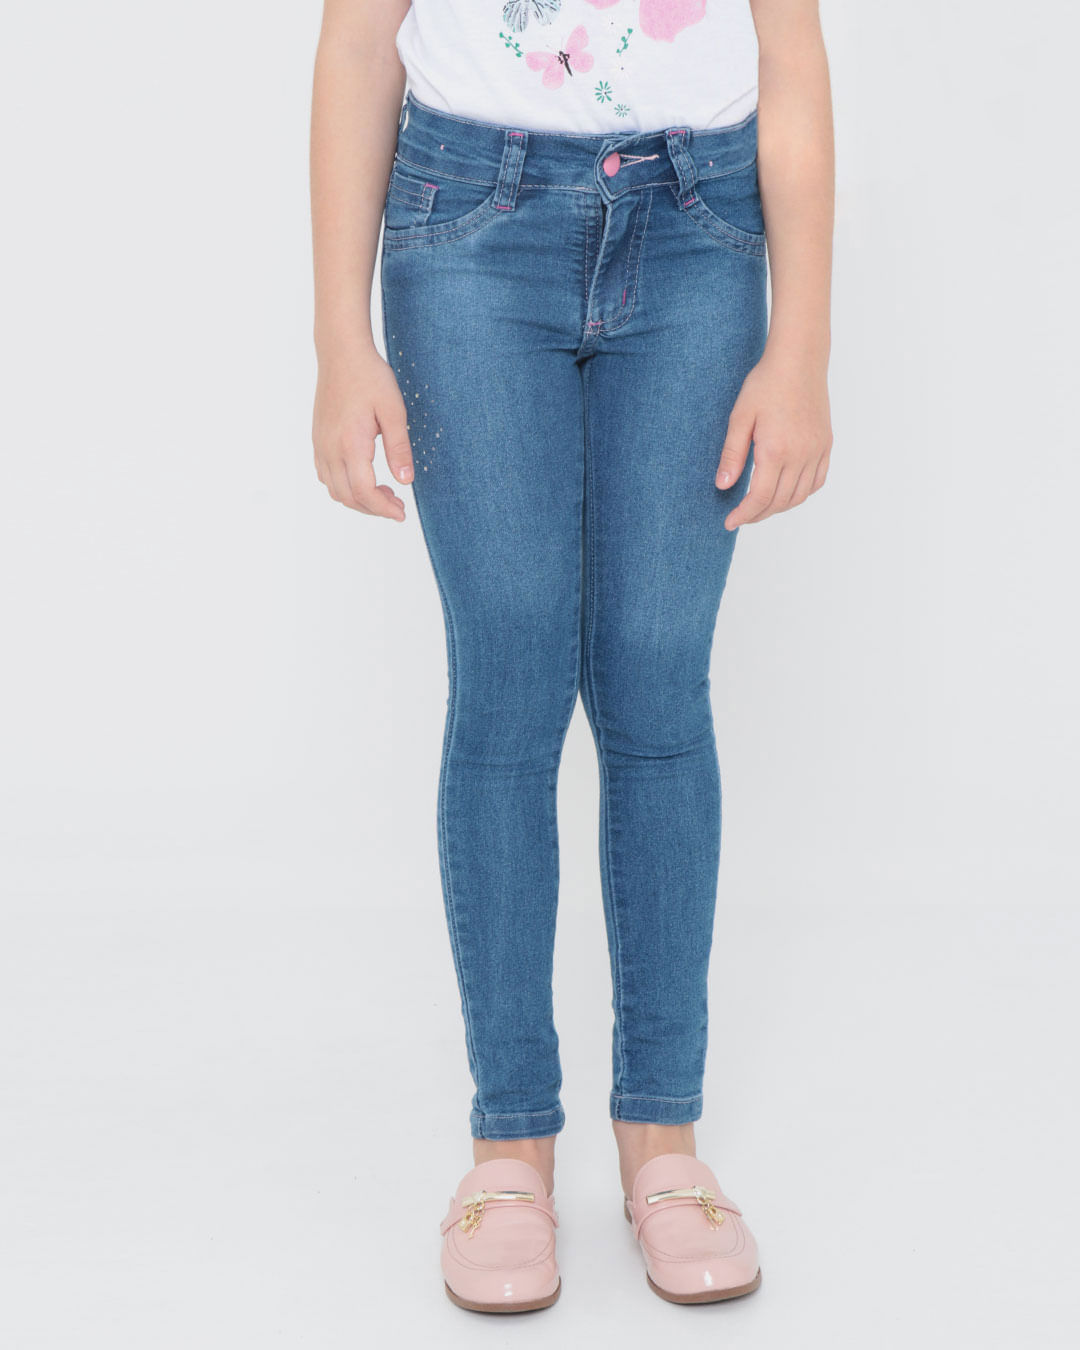 Calca-Jeans-Infantil-Strass-Azul